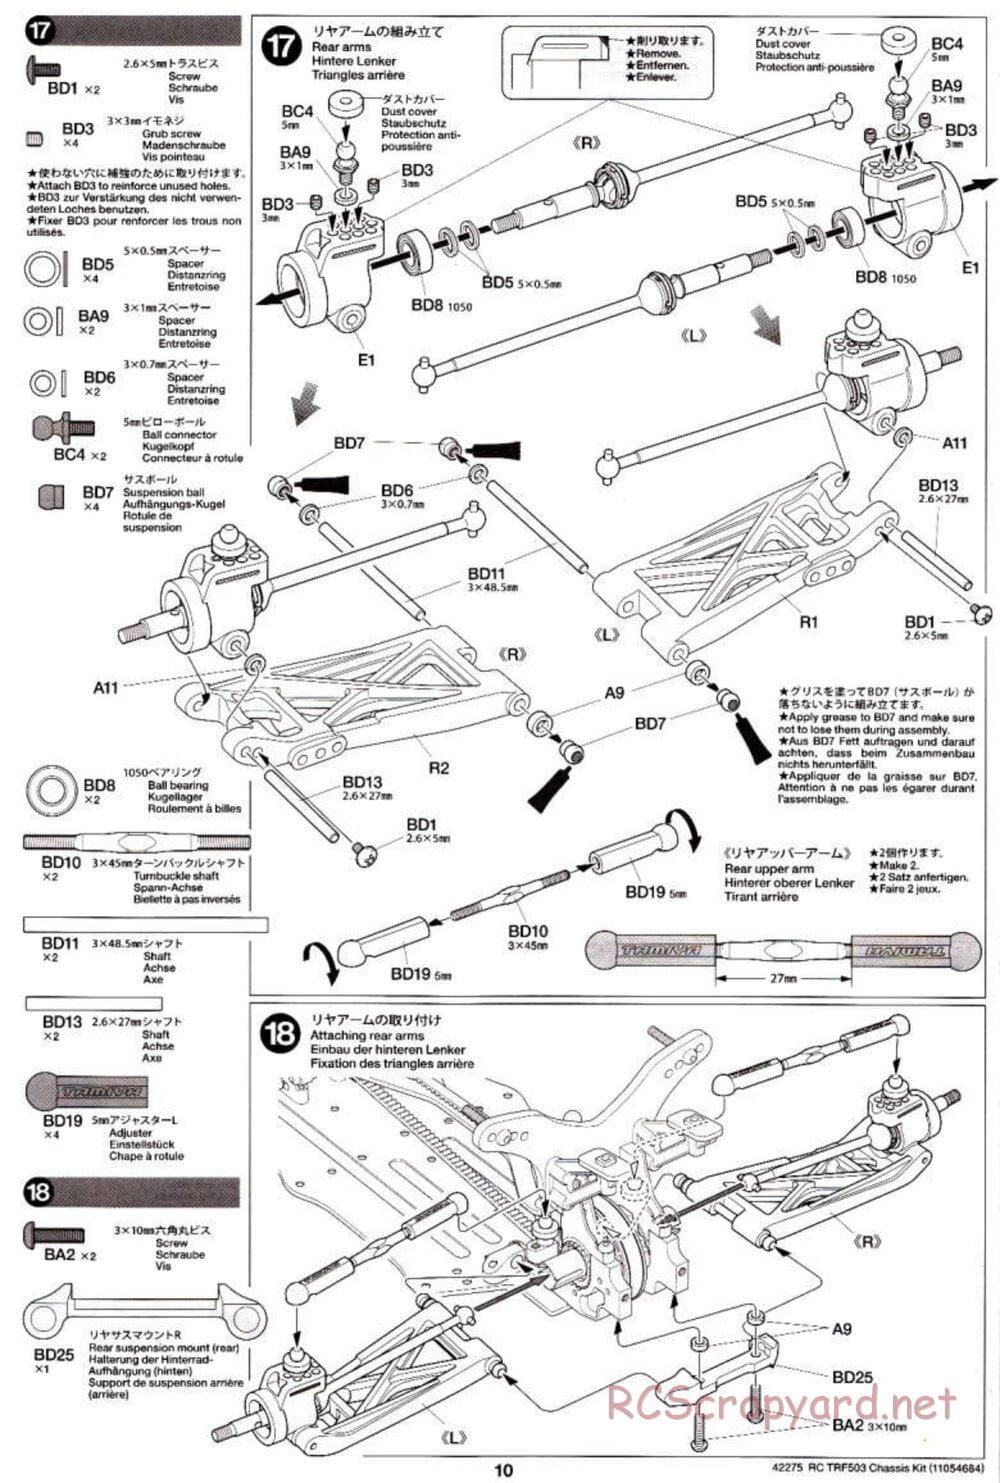 Tamiya - TRF503 Chassis - Manual - Page 10